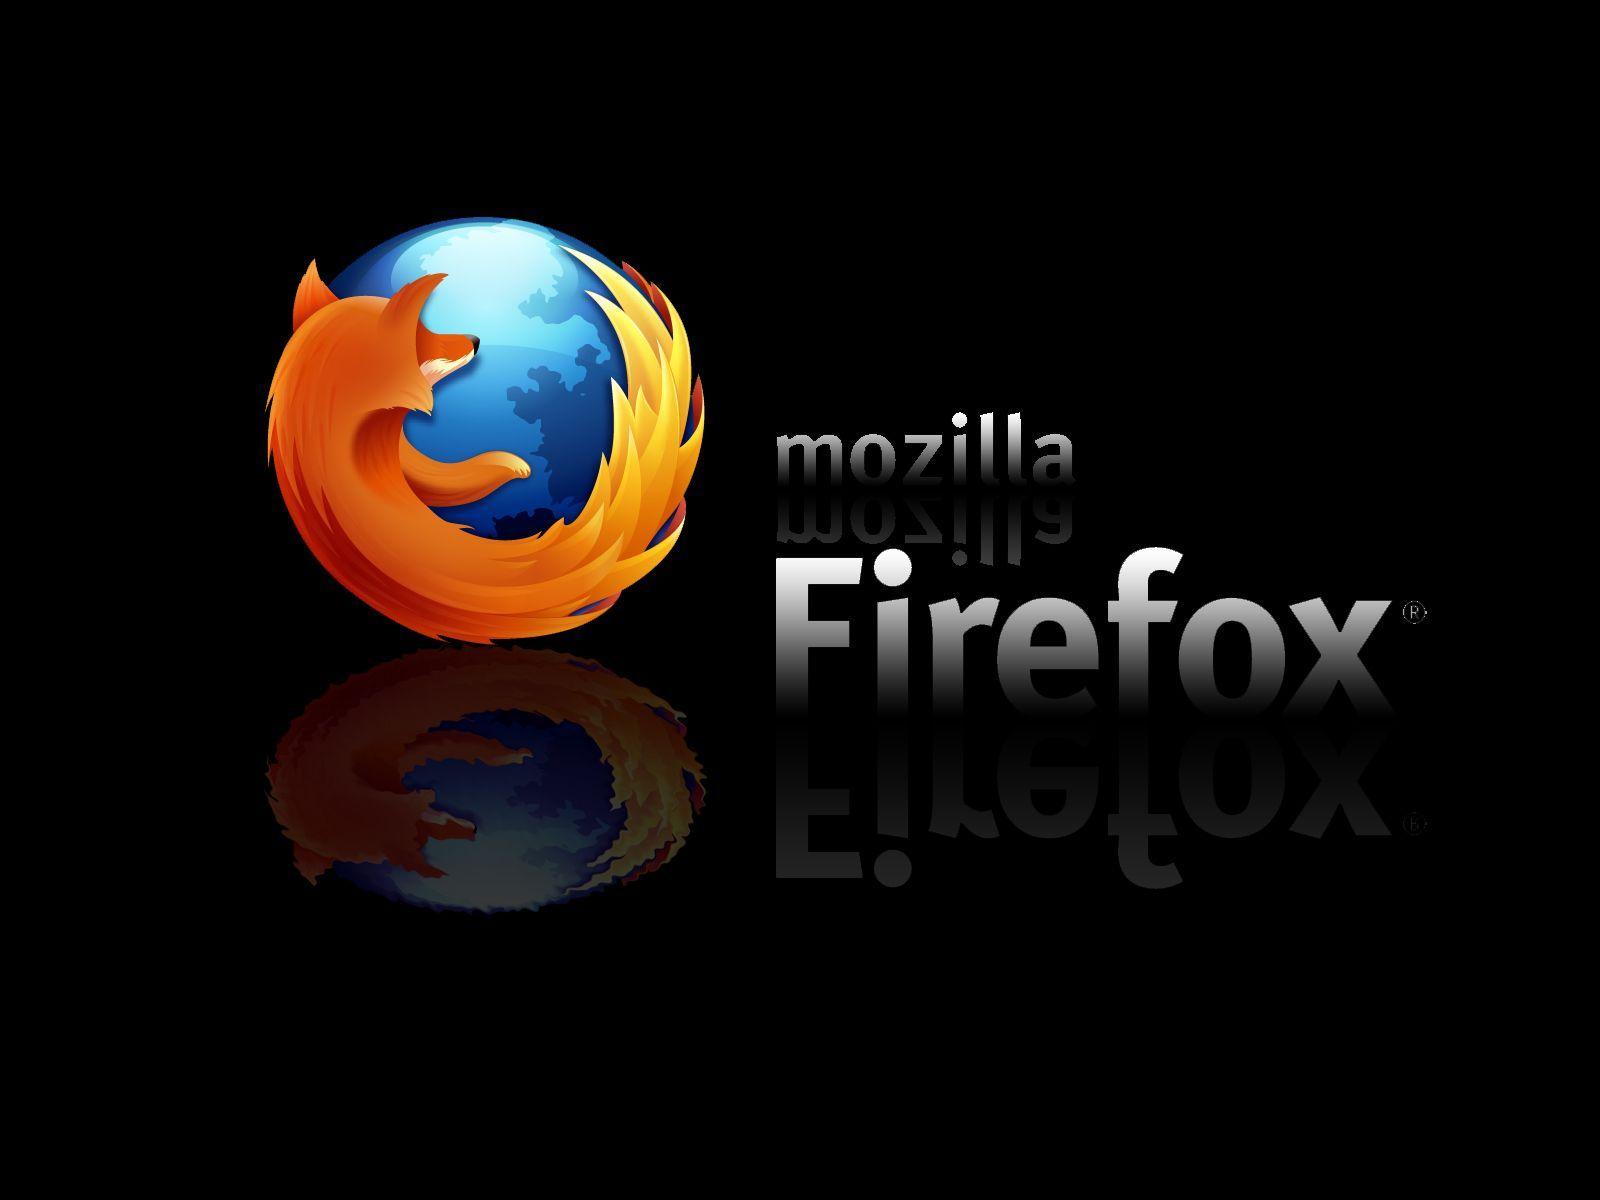 mozilla firefox portable 47.0.1